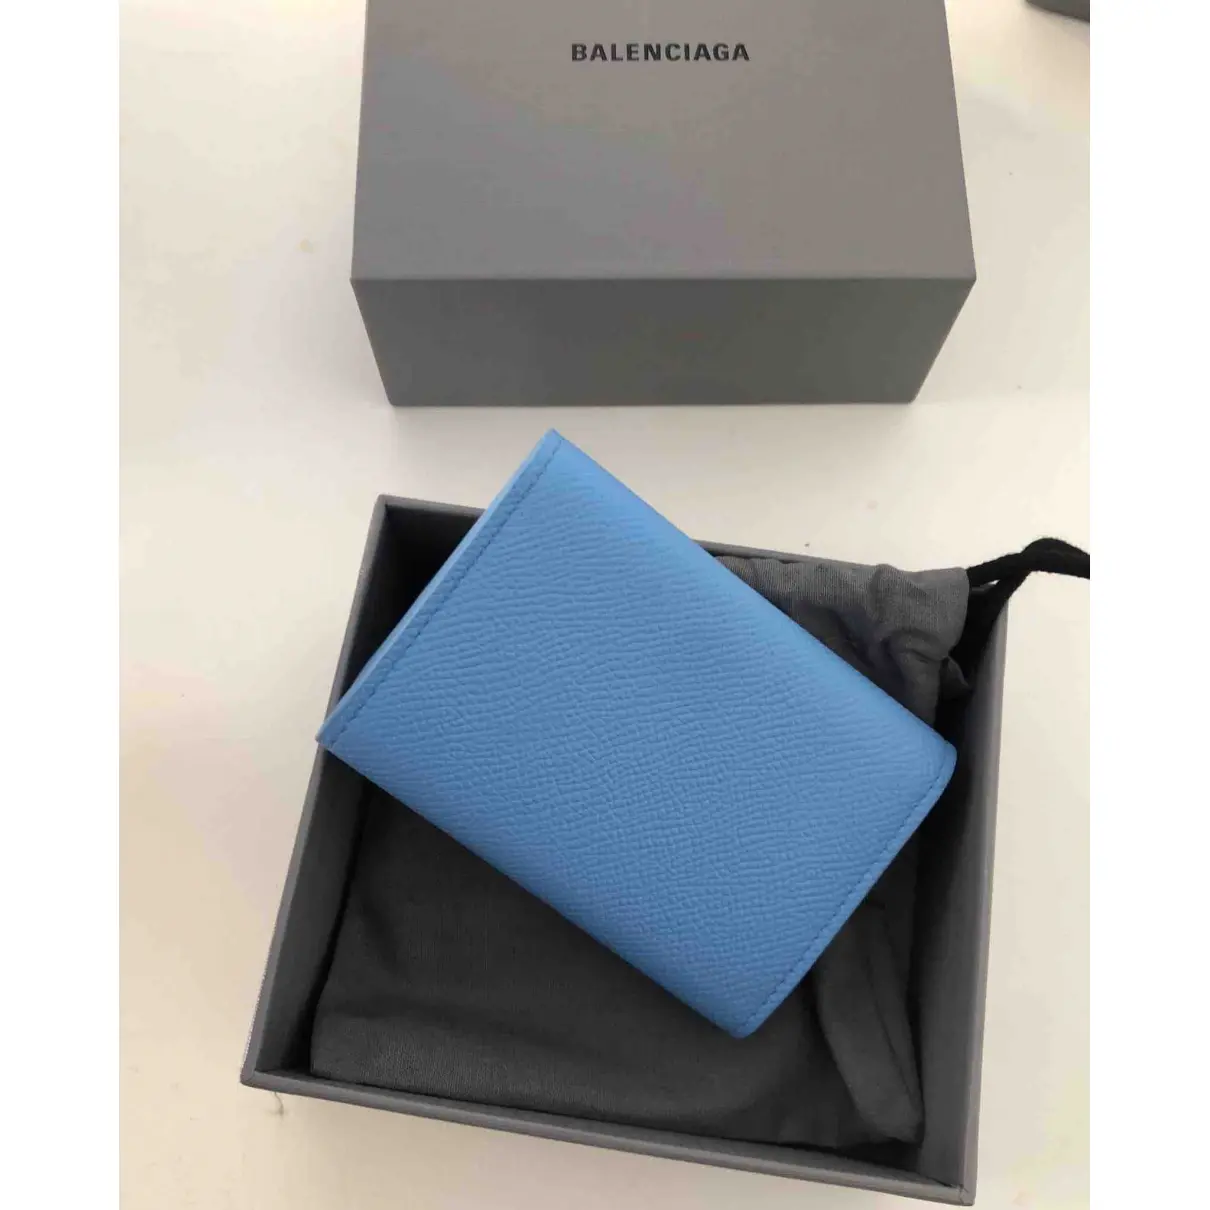 Buy Balenciaga Leather card wallet online